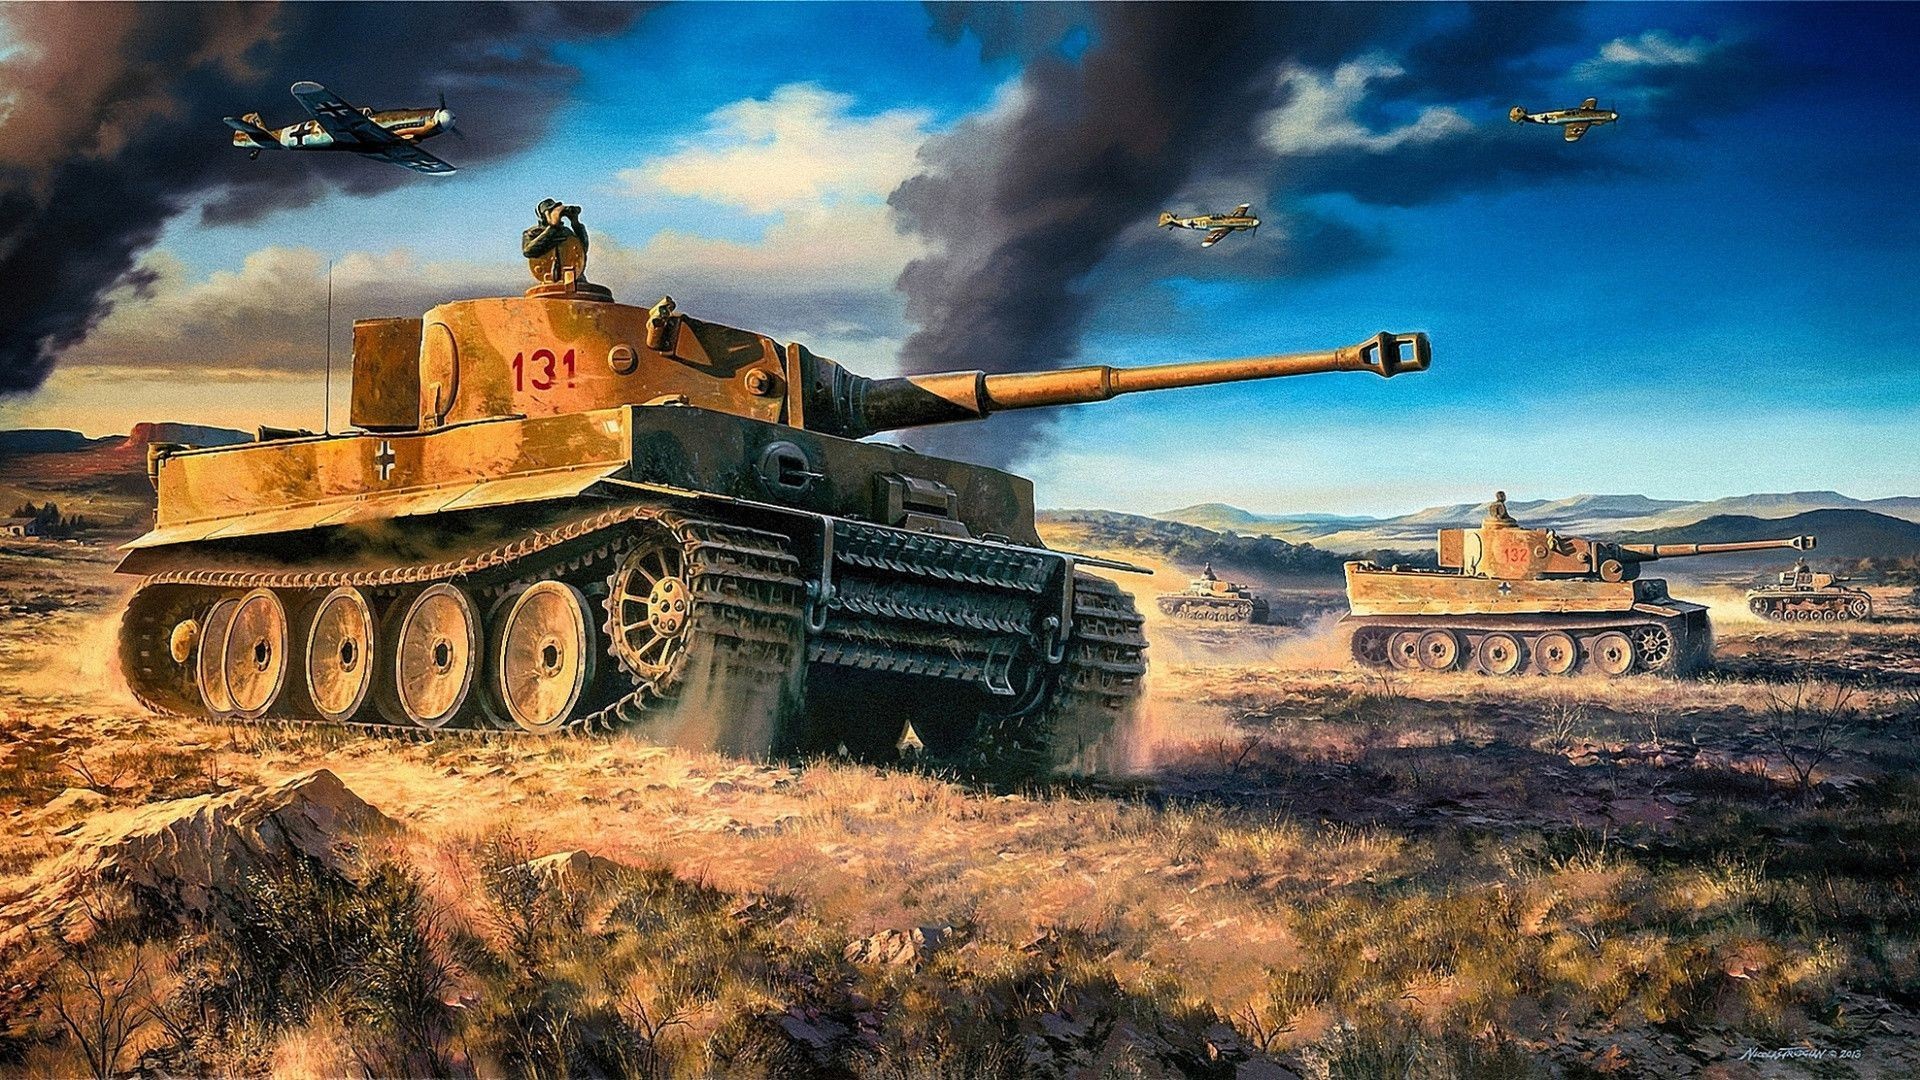 Desktop Wallpaper Military, Tank, War, Gaming, Hd Image, Picture,  Background, Jswrmb